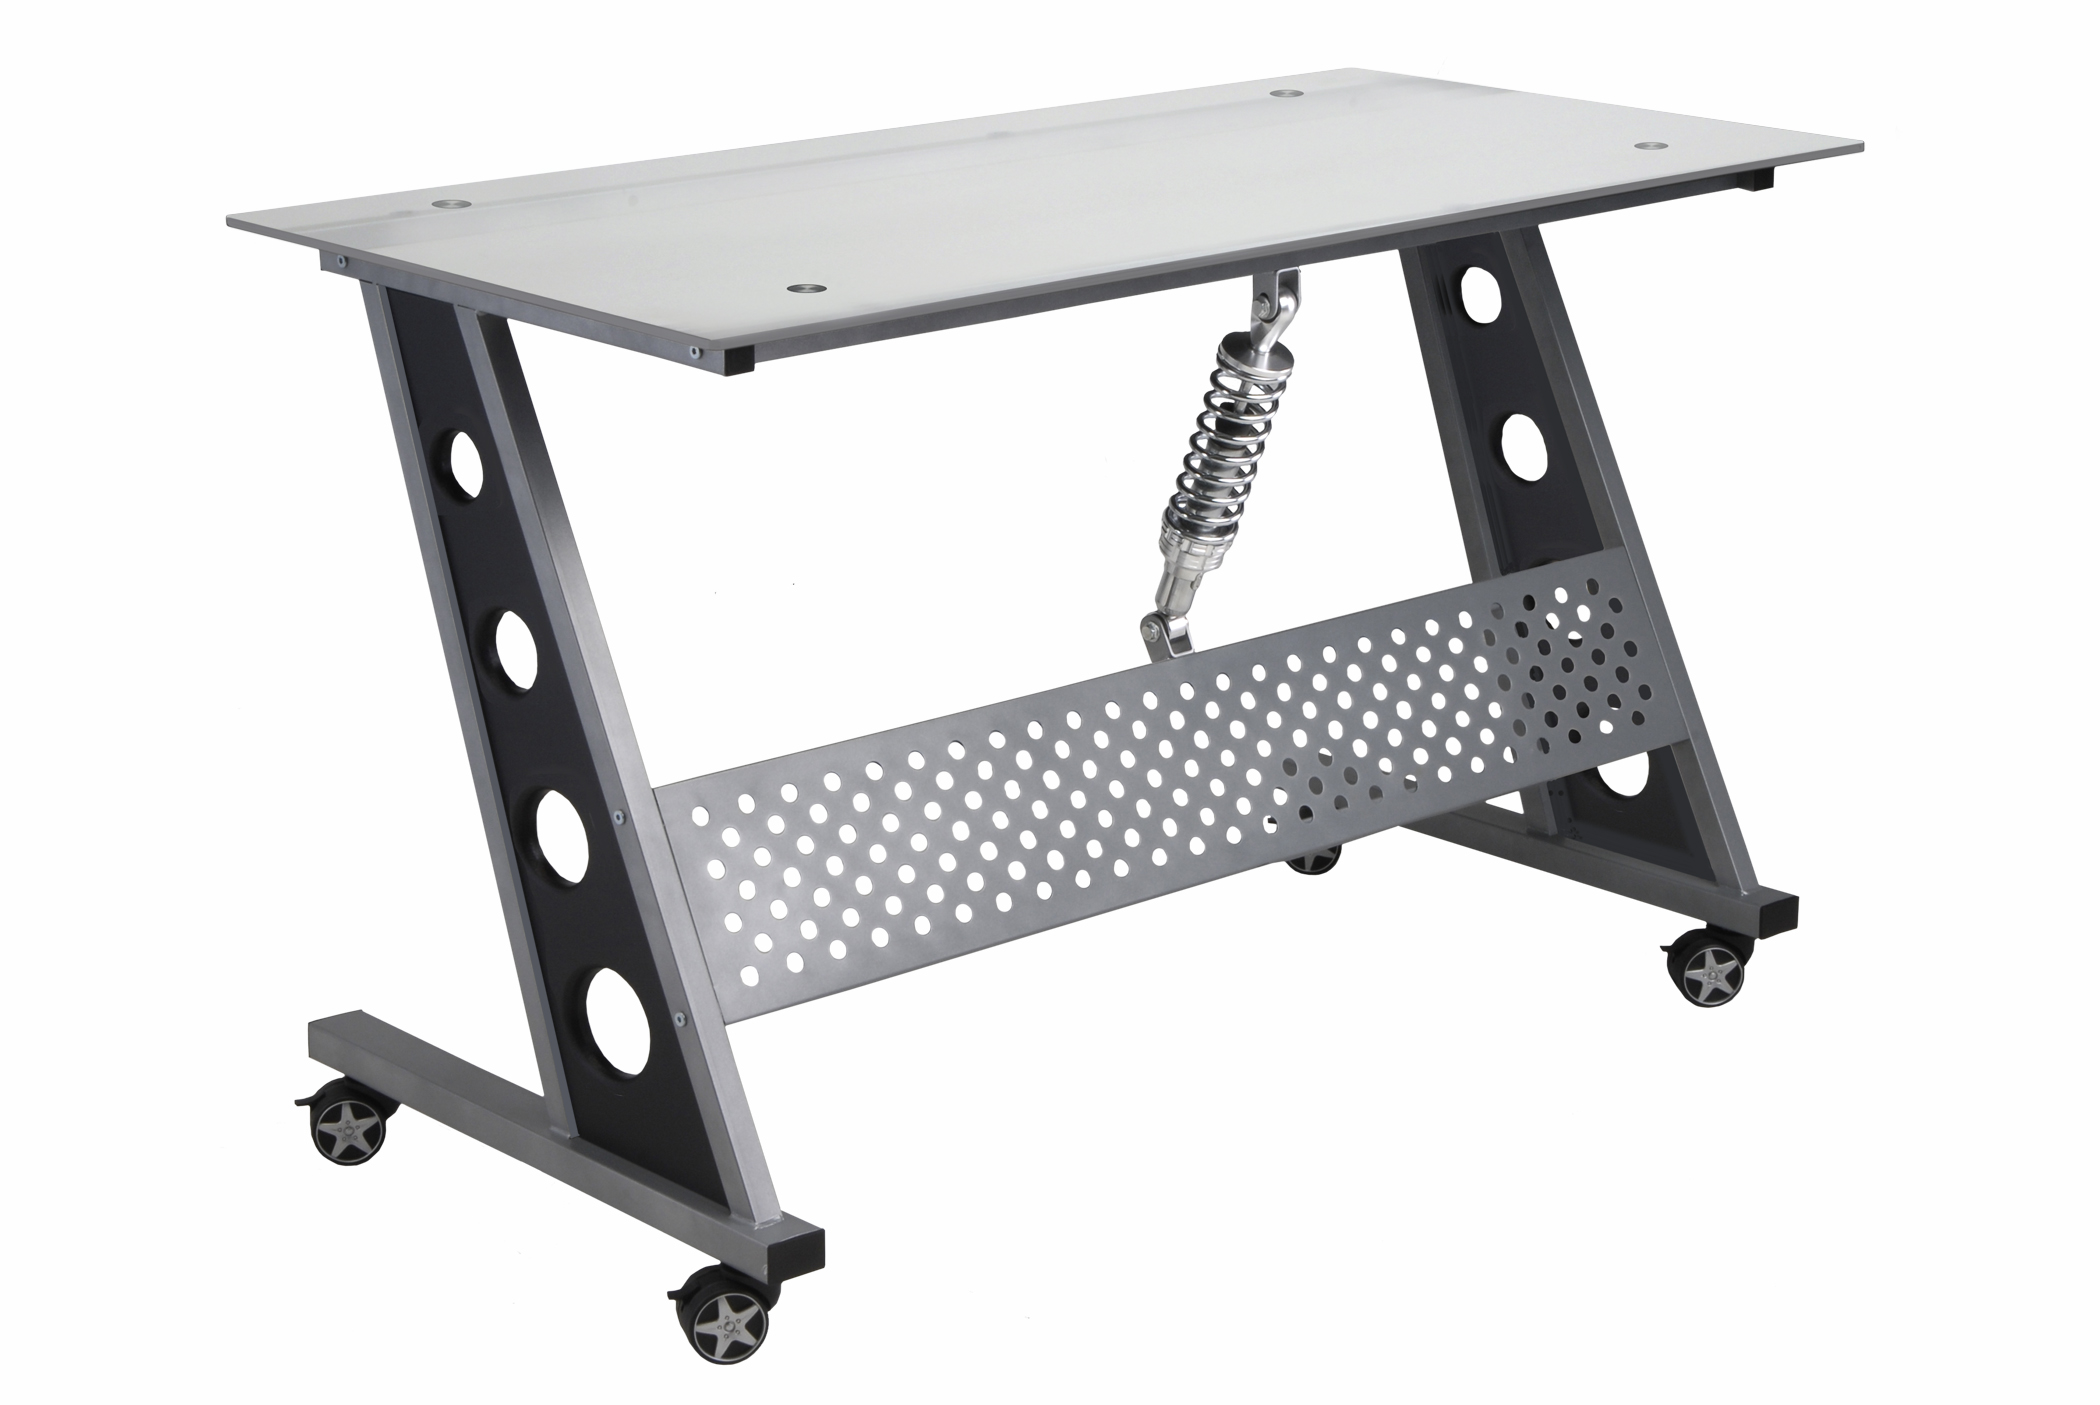 Intro-Tech Automotive, Pitstop Furniture, IND1200C Compact Desk Clear, Office Desk